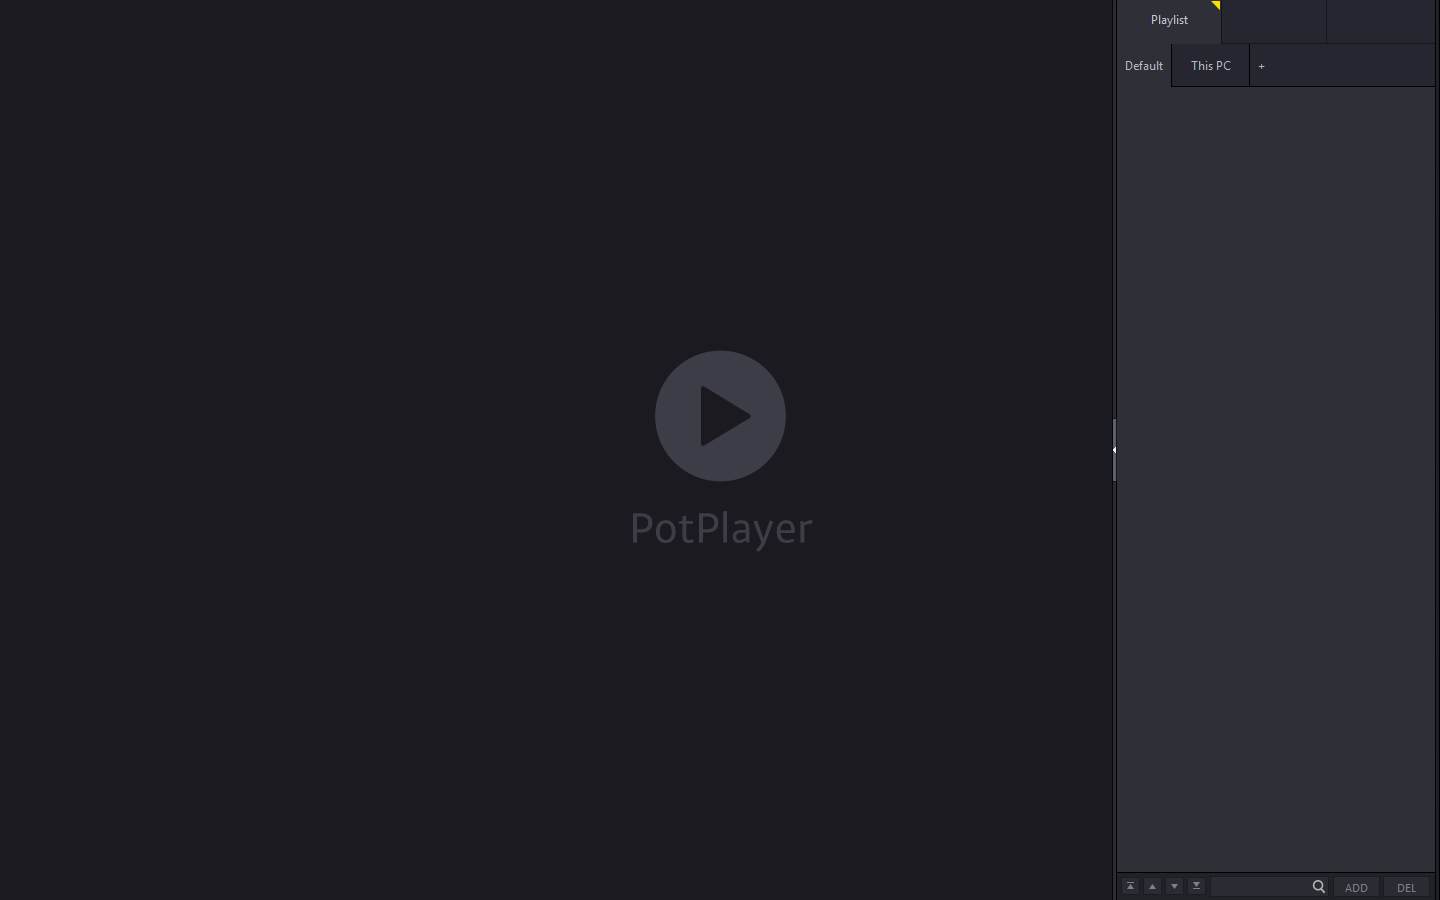 download daum potplayer windows 10 64 bit